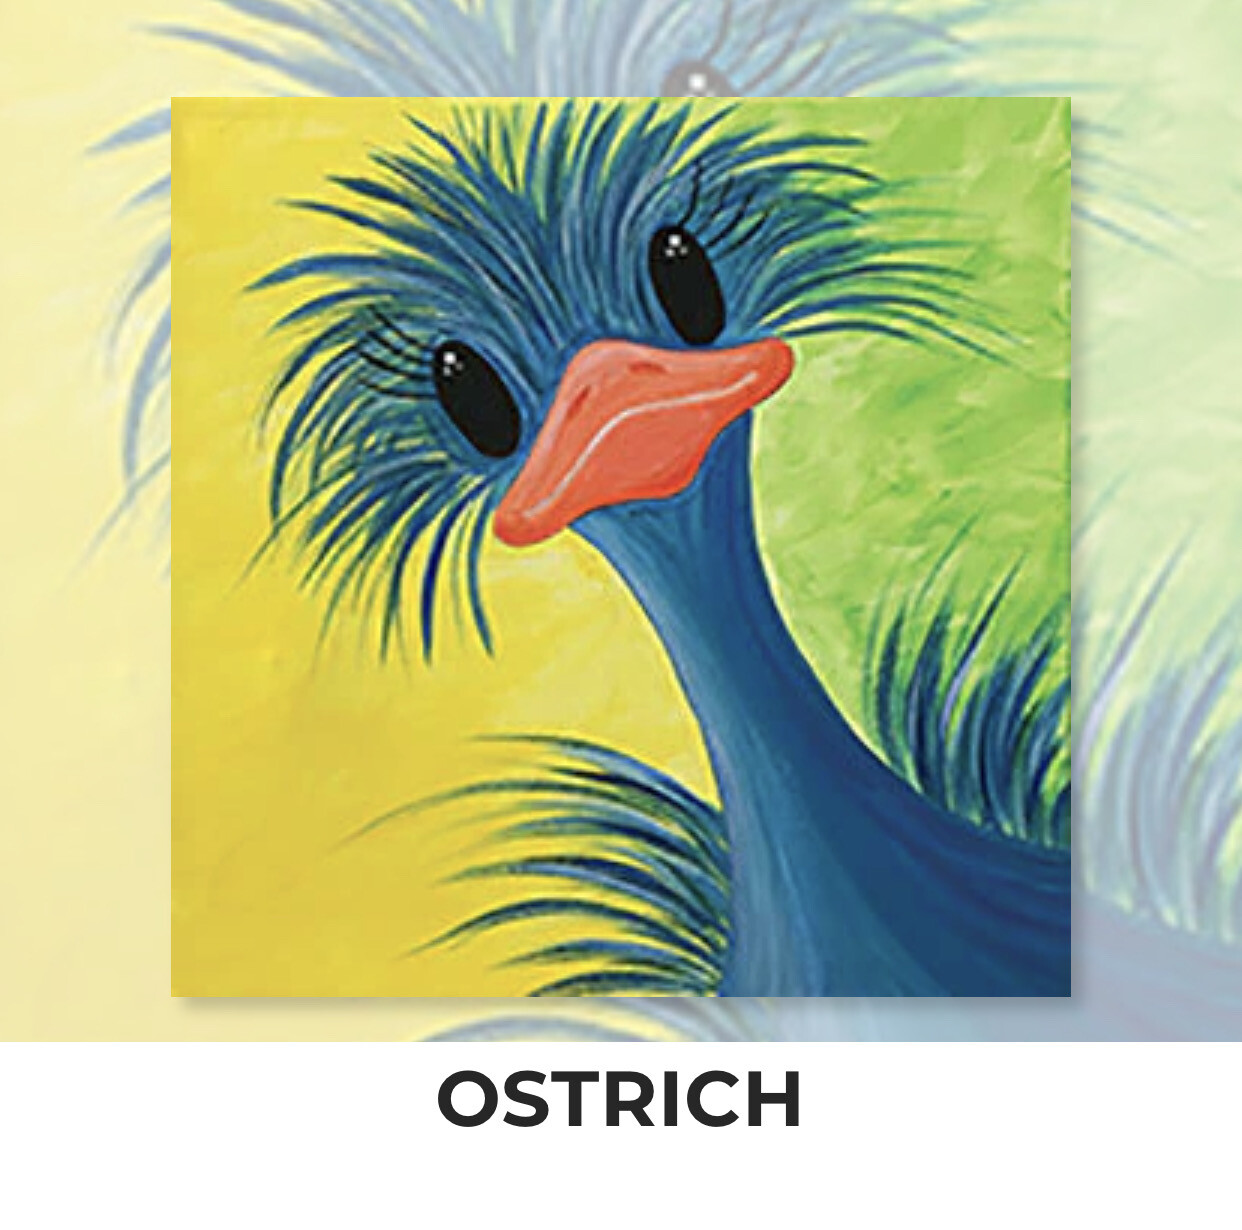 Ostrich KIDS Acrylic Paint On Canvas DIY Art Kit 